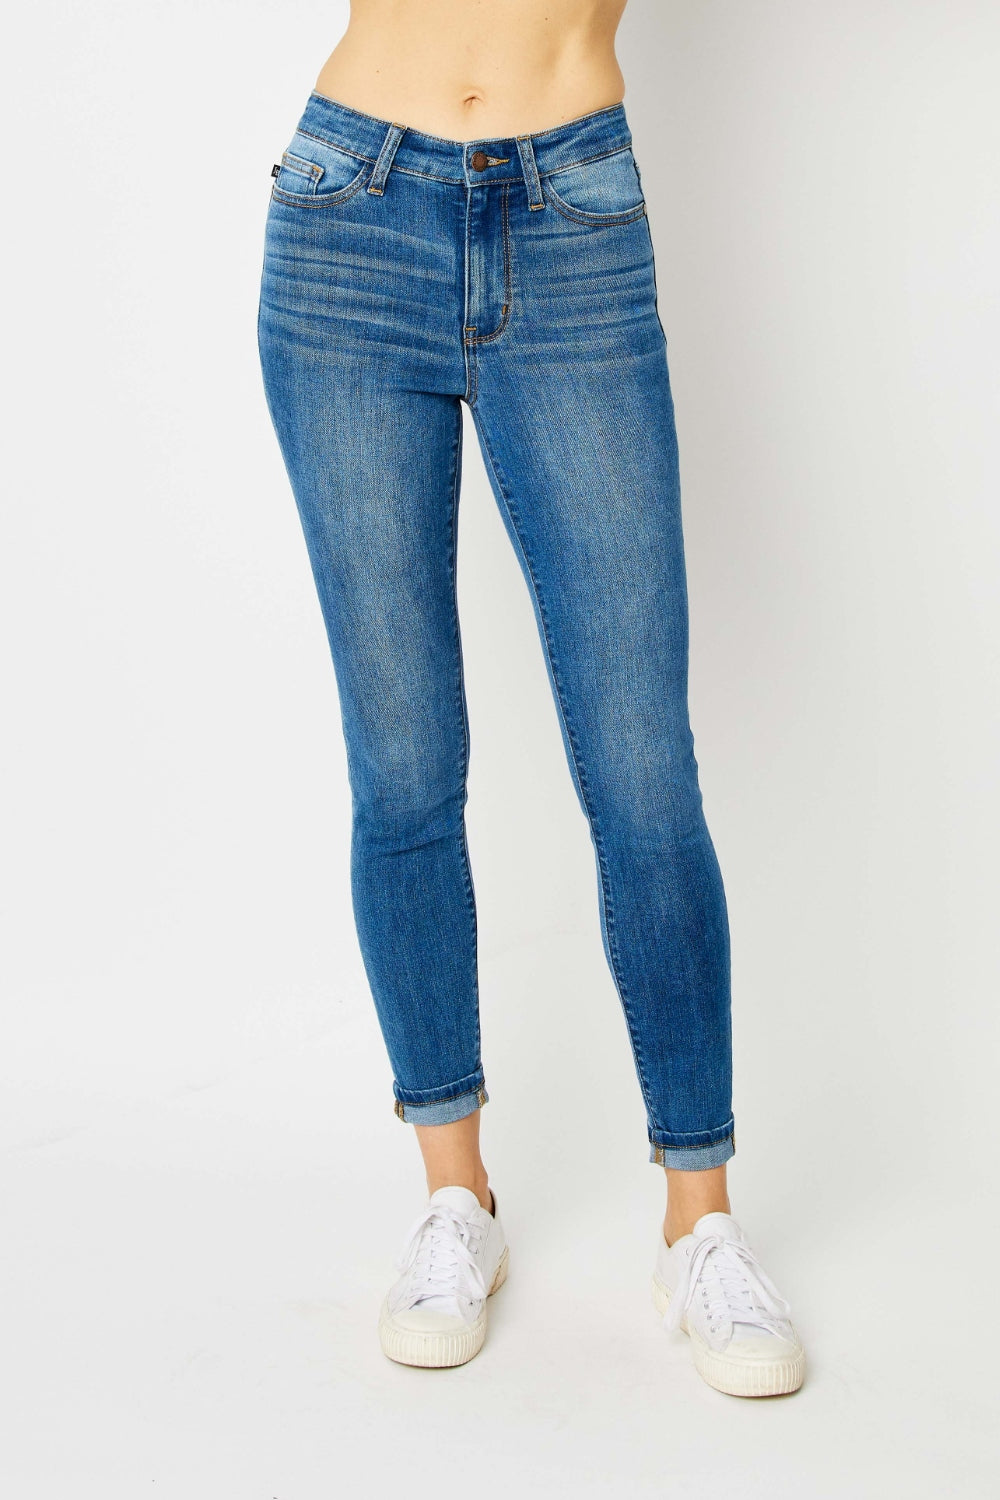 Judy Blue Full Size Cuffed Hem Skinny Jeans pants Krazy Heart Designs Boutique Medium 0(24) 